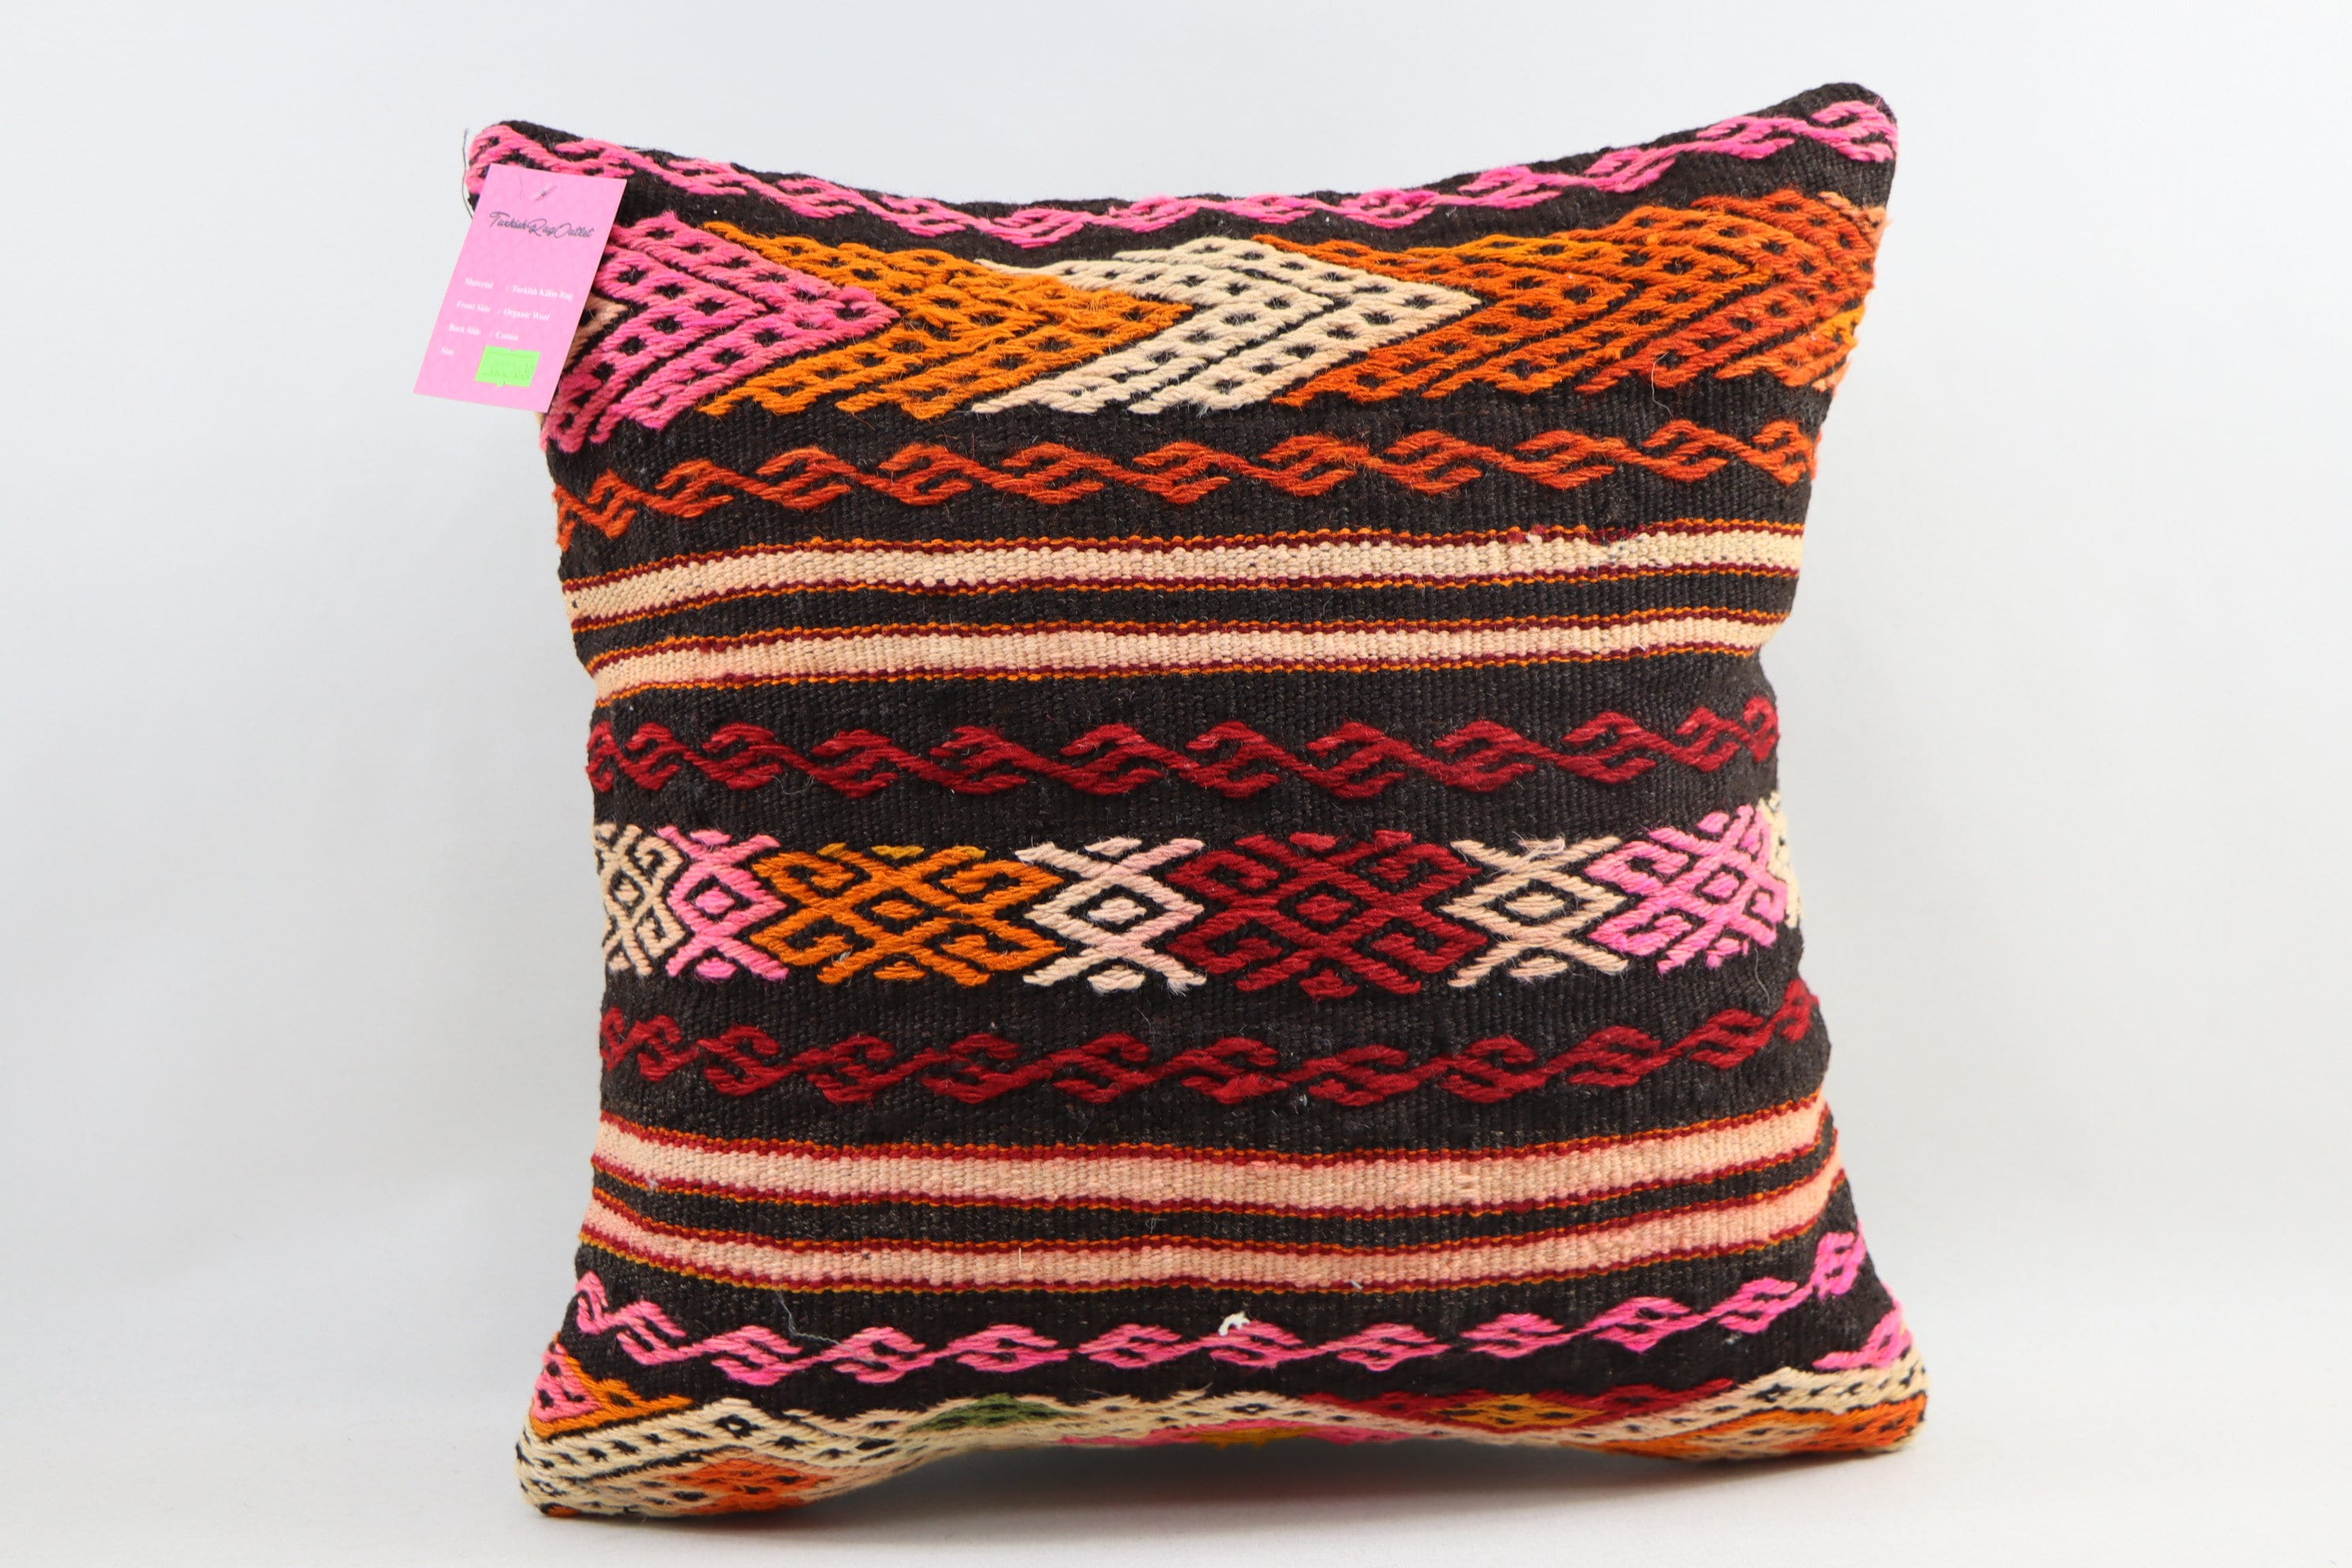 anatolian kilim pillow striped kilim pillow sofa pillow ethnic pillow 12x20 handwoven kilim pillow home decor cushion cover code 1630